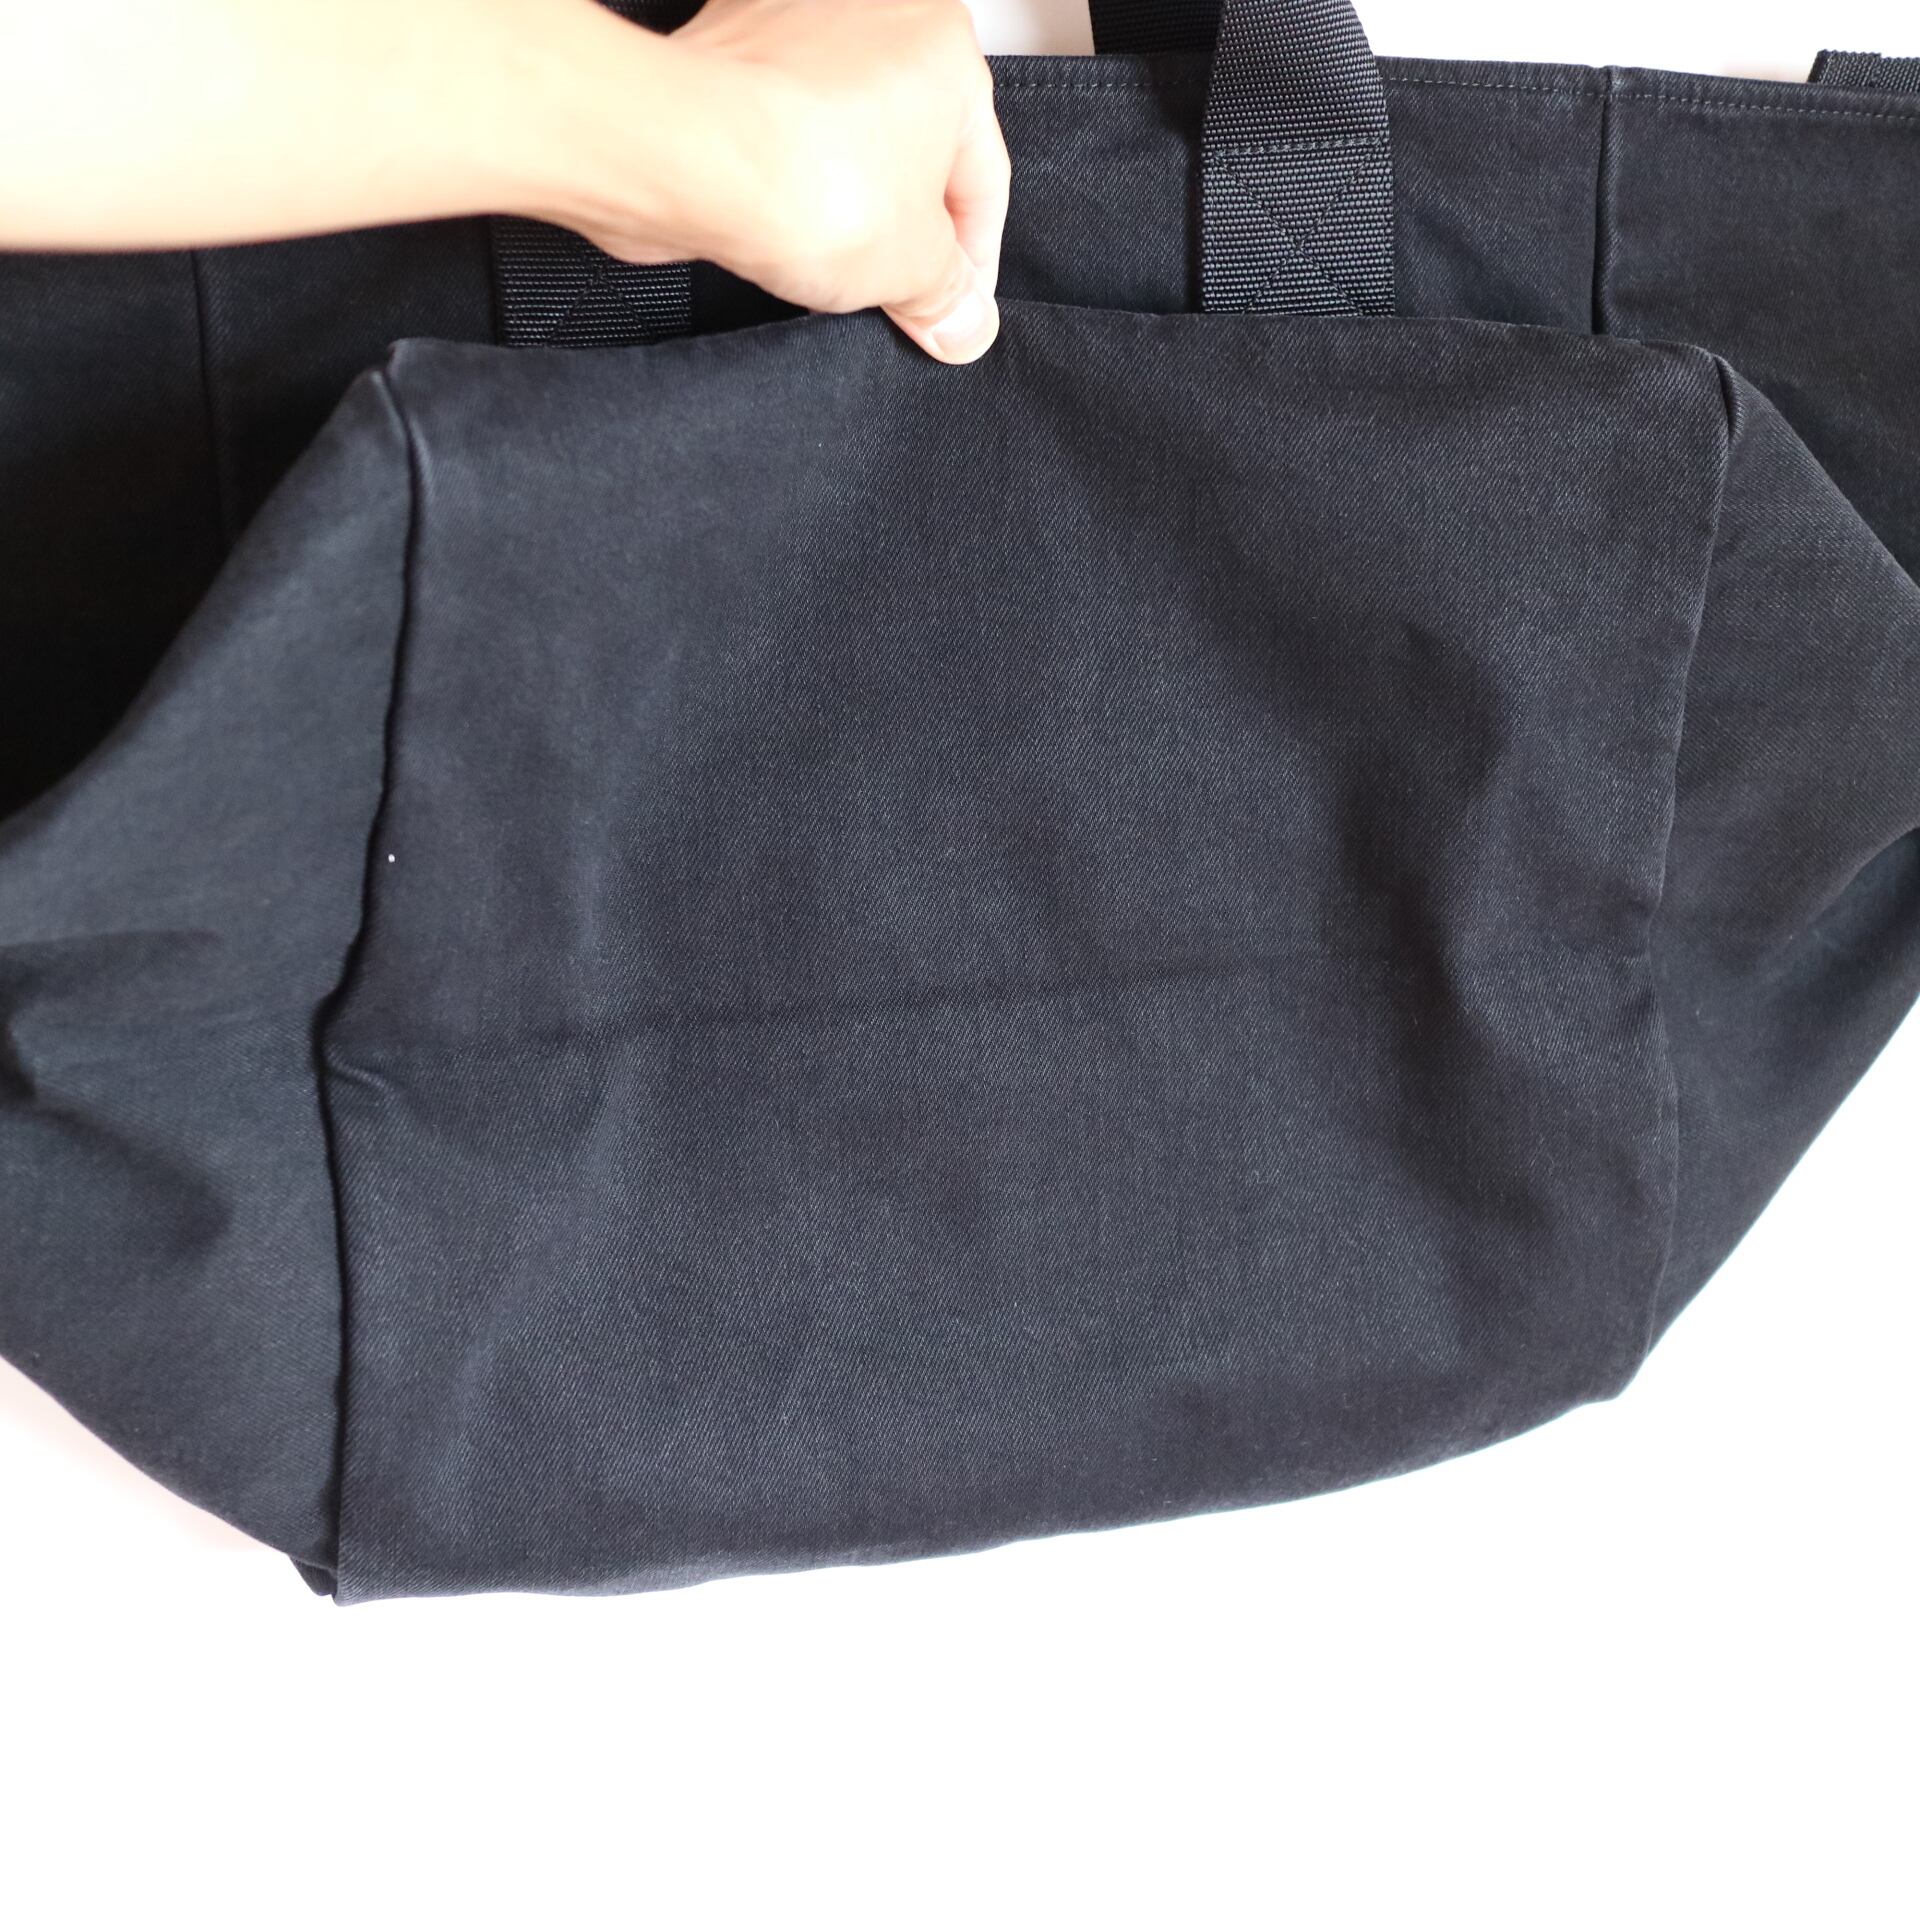 CALVIN KLEIN JEANS / Black Denim Fabric Big Tote Bag / Made in